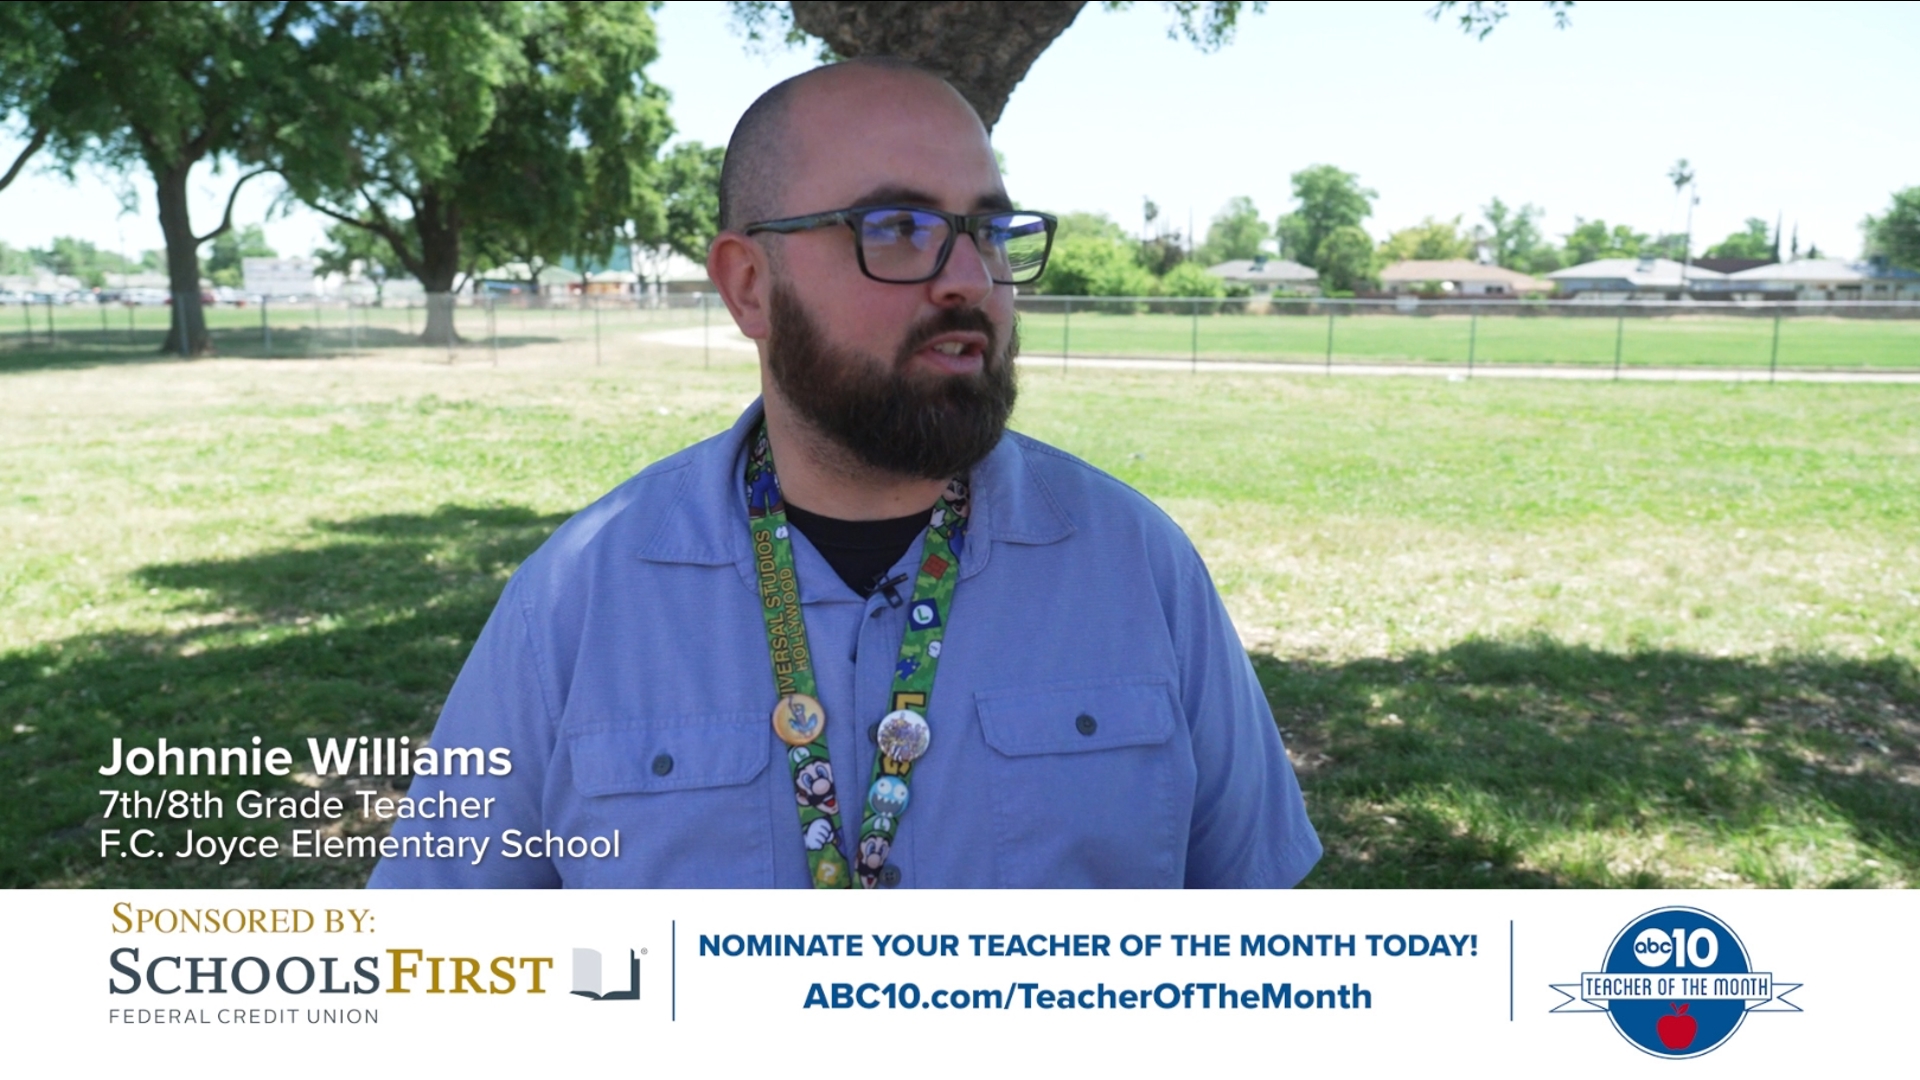 Mr. Williams is a 7th/8th grade teacher at F.C. Joyce Elementary School in North Highlands, CA.